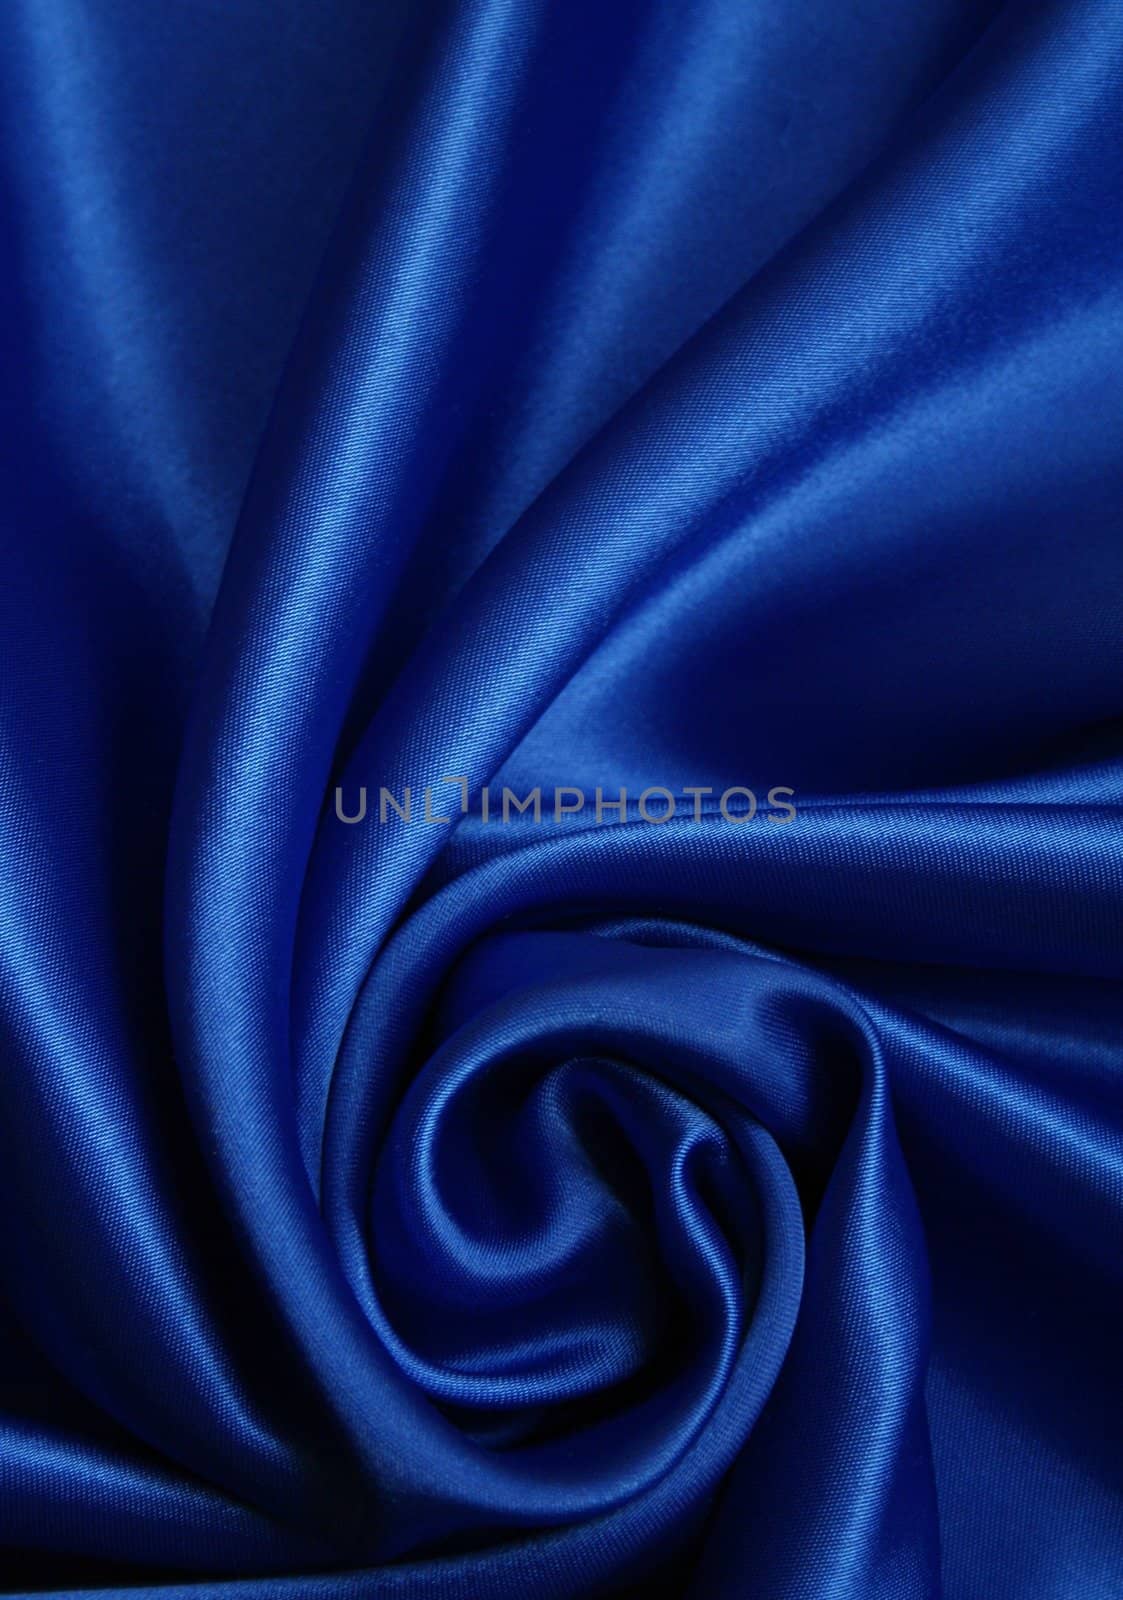 Smooth elegant dark blue silk can use as background 

